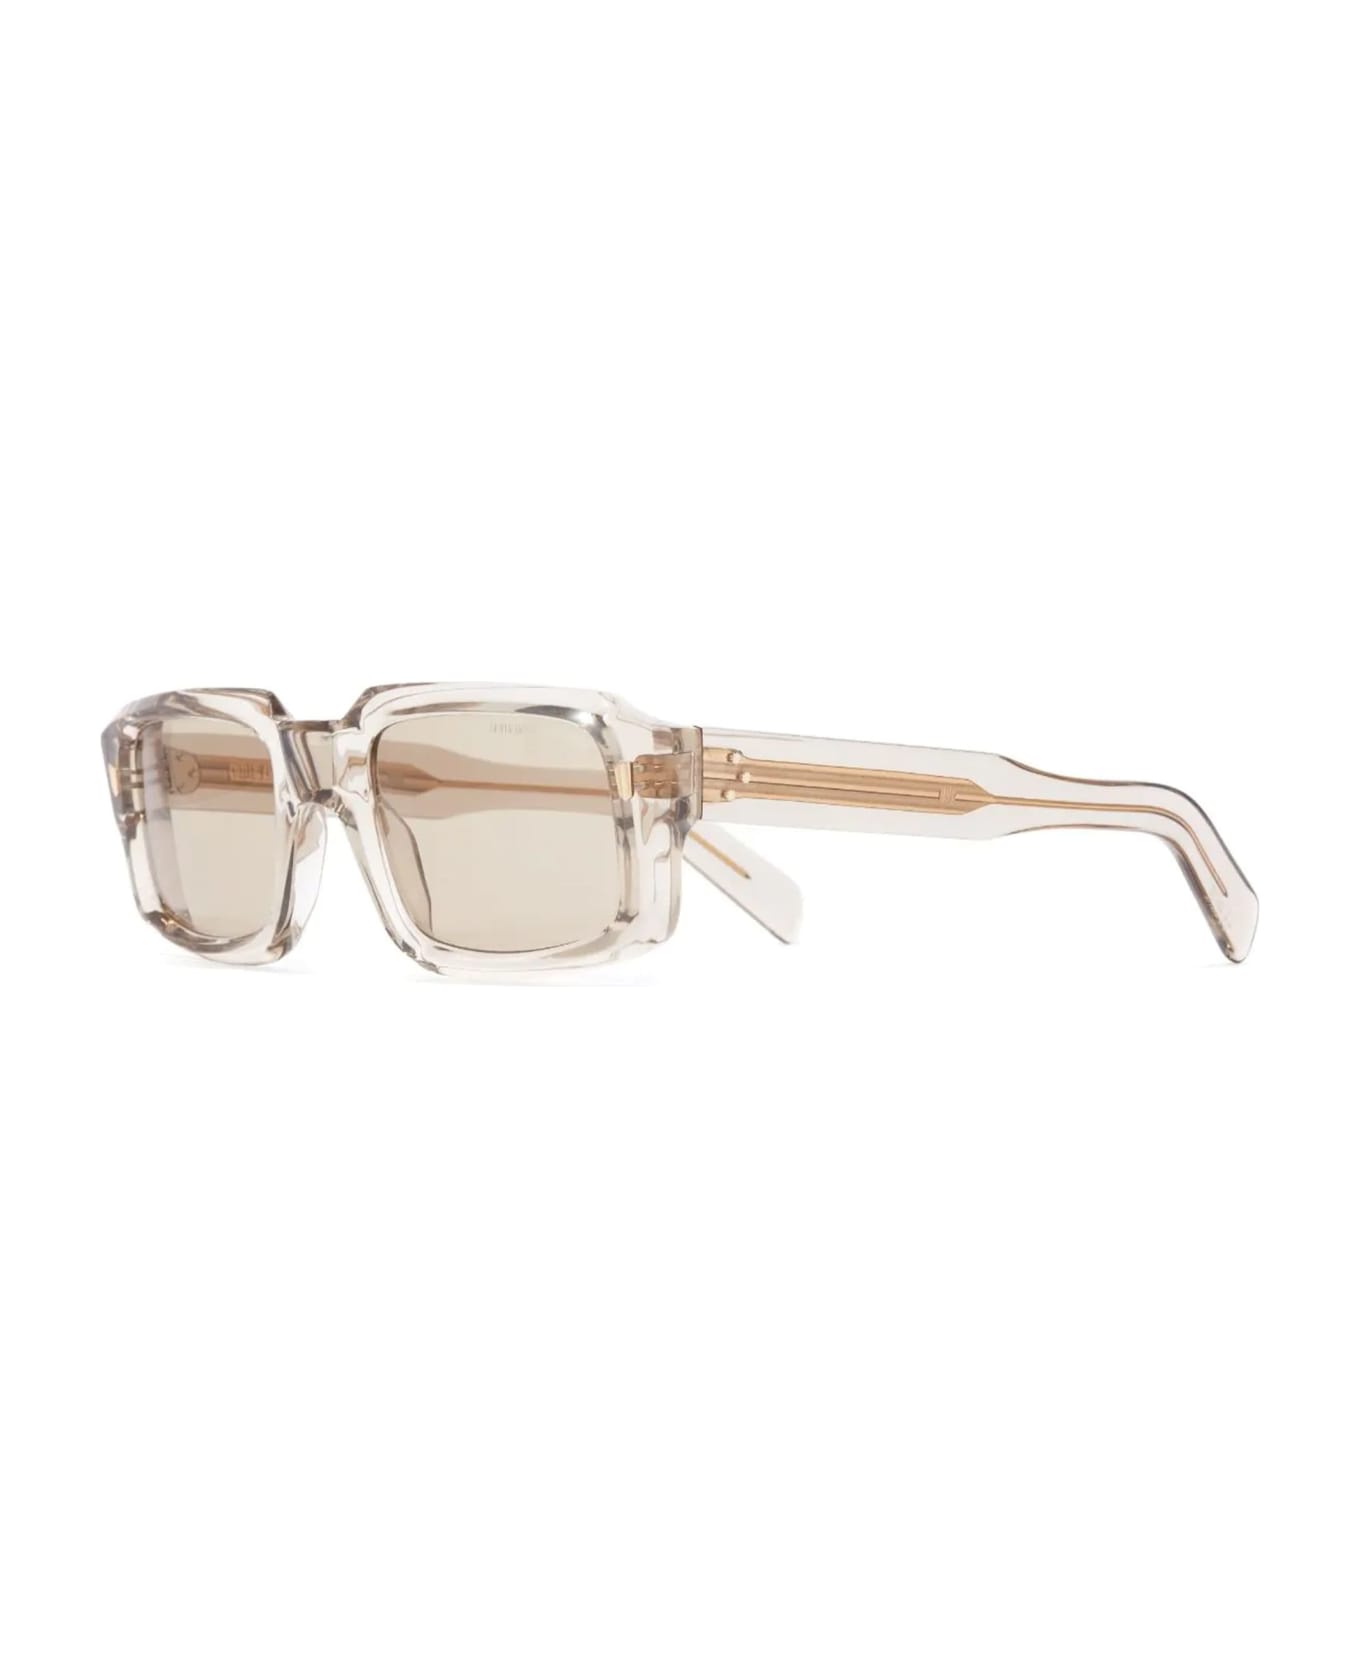 Cutler and Gross 9495 / Sand Crystal Sunglasses - transparent beige